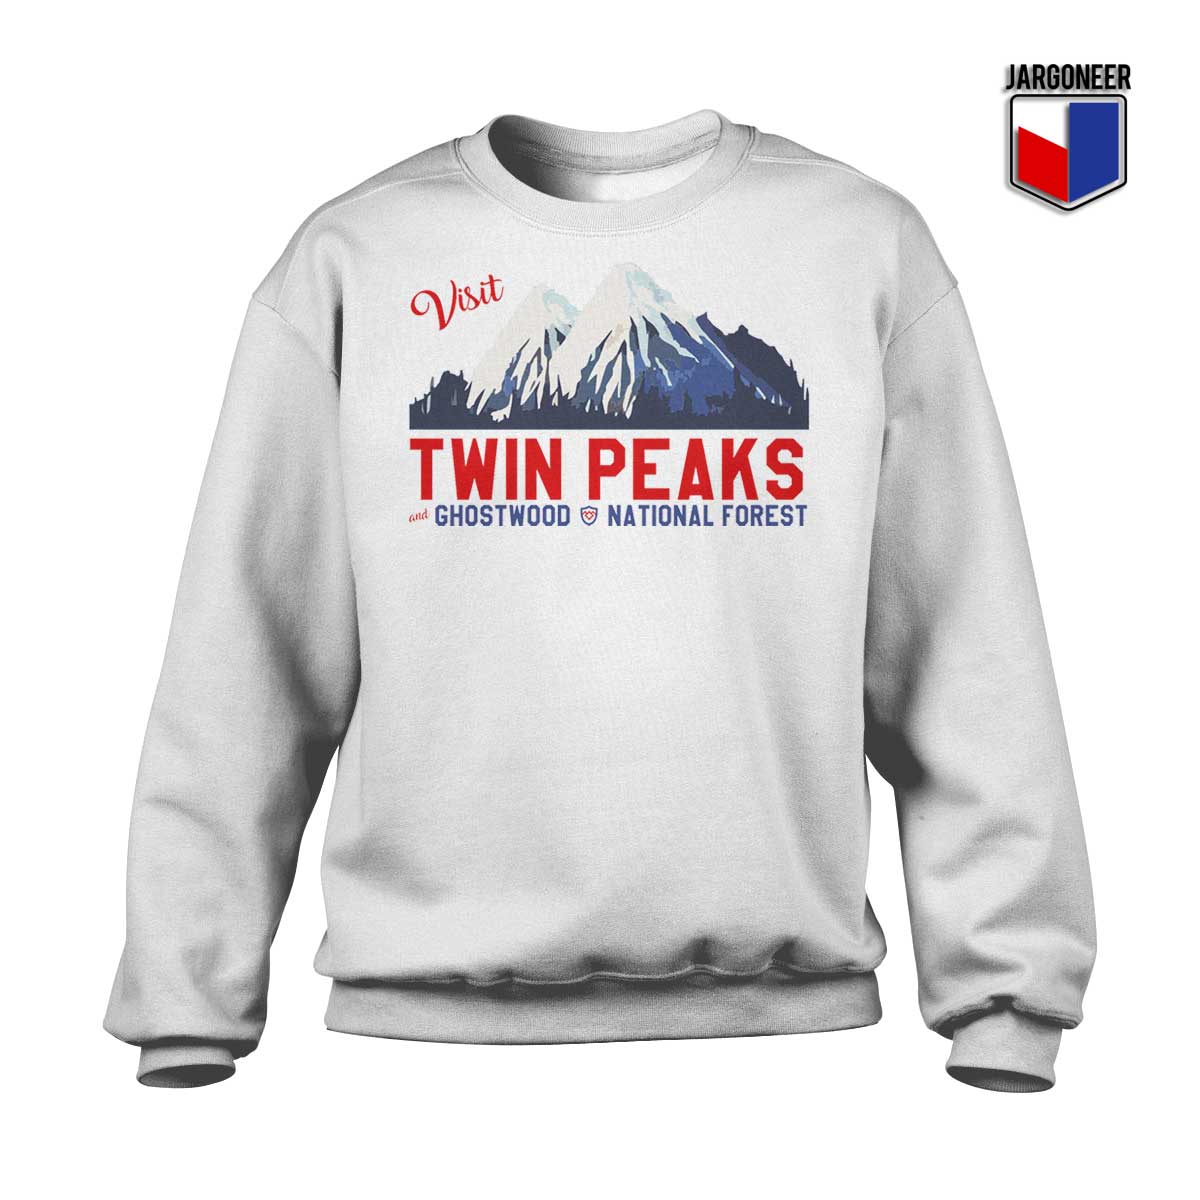 Twin Peaks Ghostwood National Forest Sweatshirt - Shop Unique Graphic Cool Shirt Designs